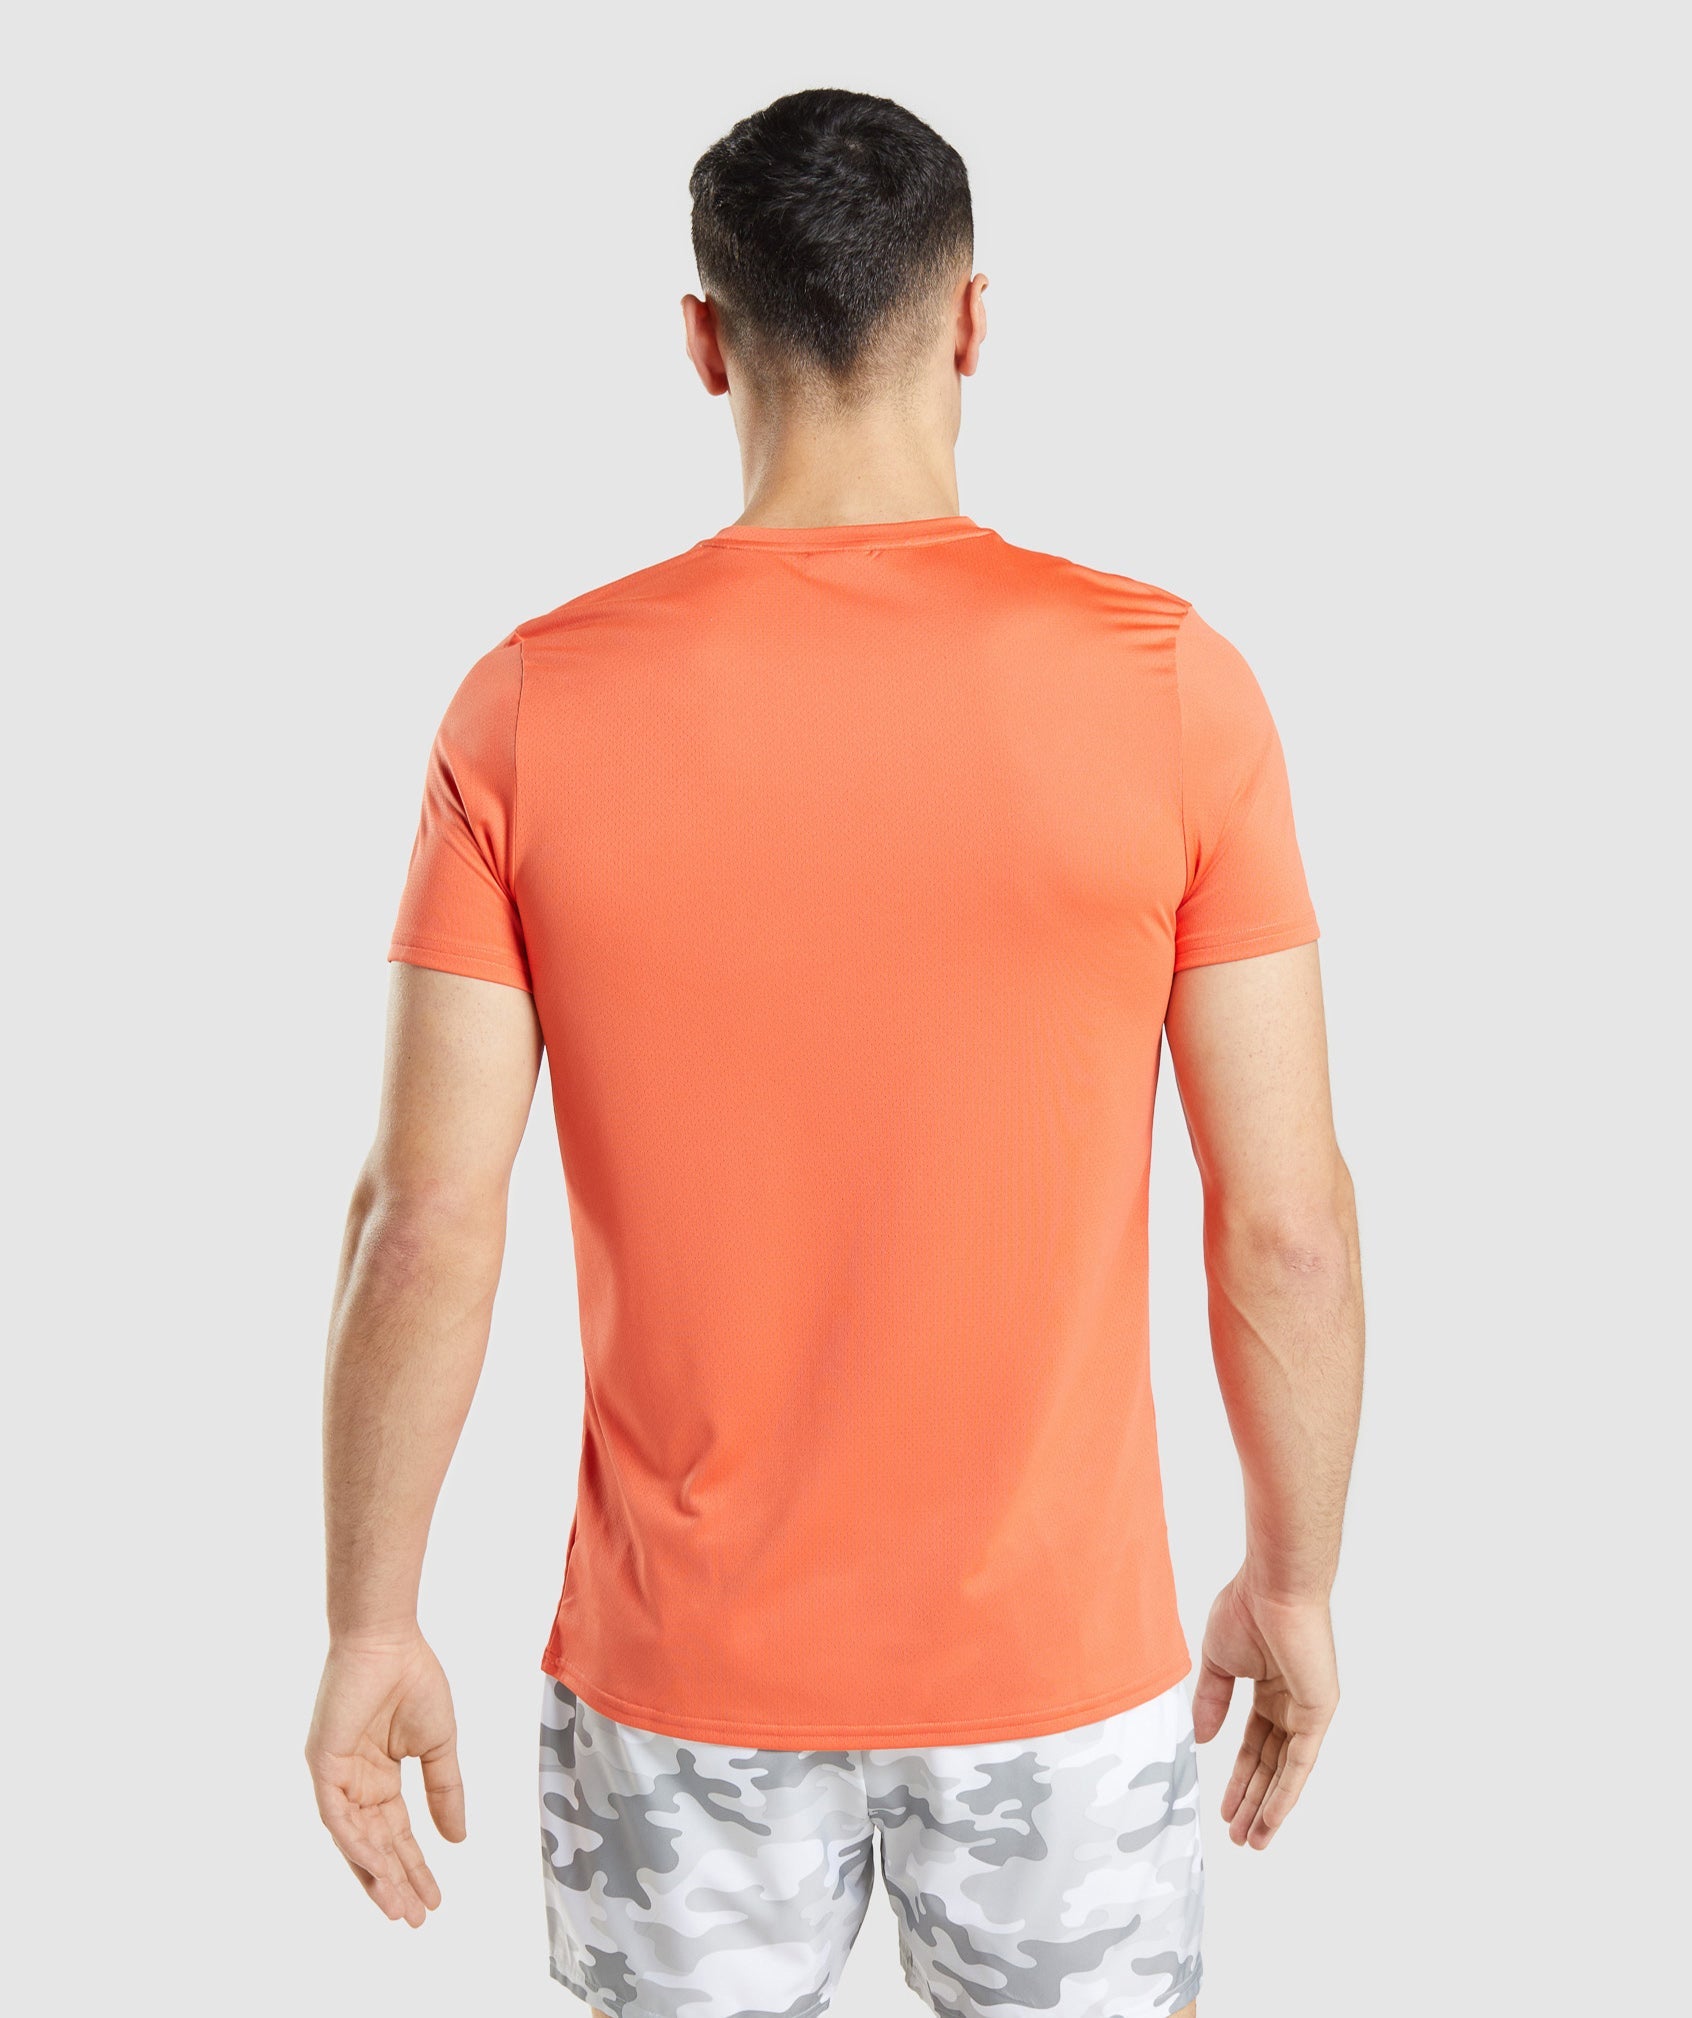 Arrival Graphic T-Shirt in Papaya Orange - view 2